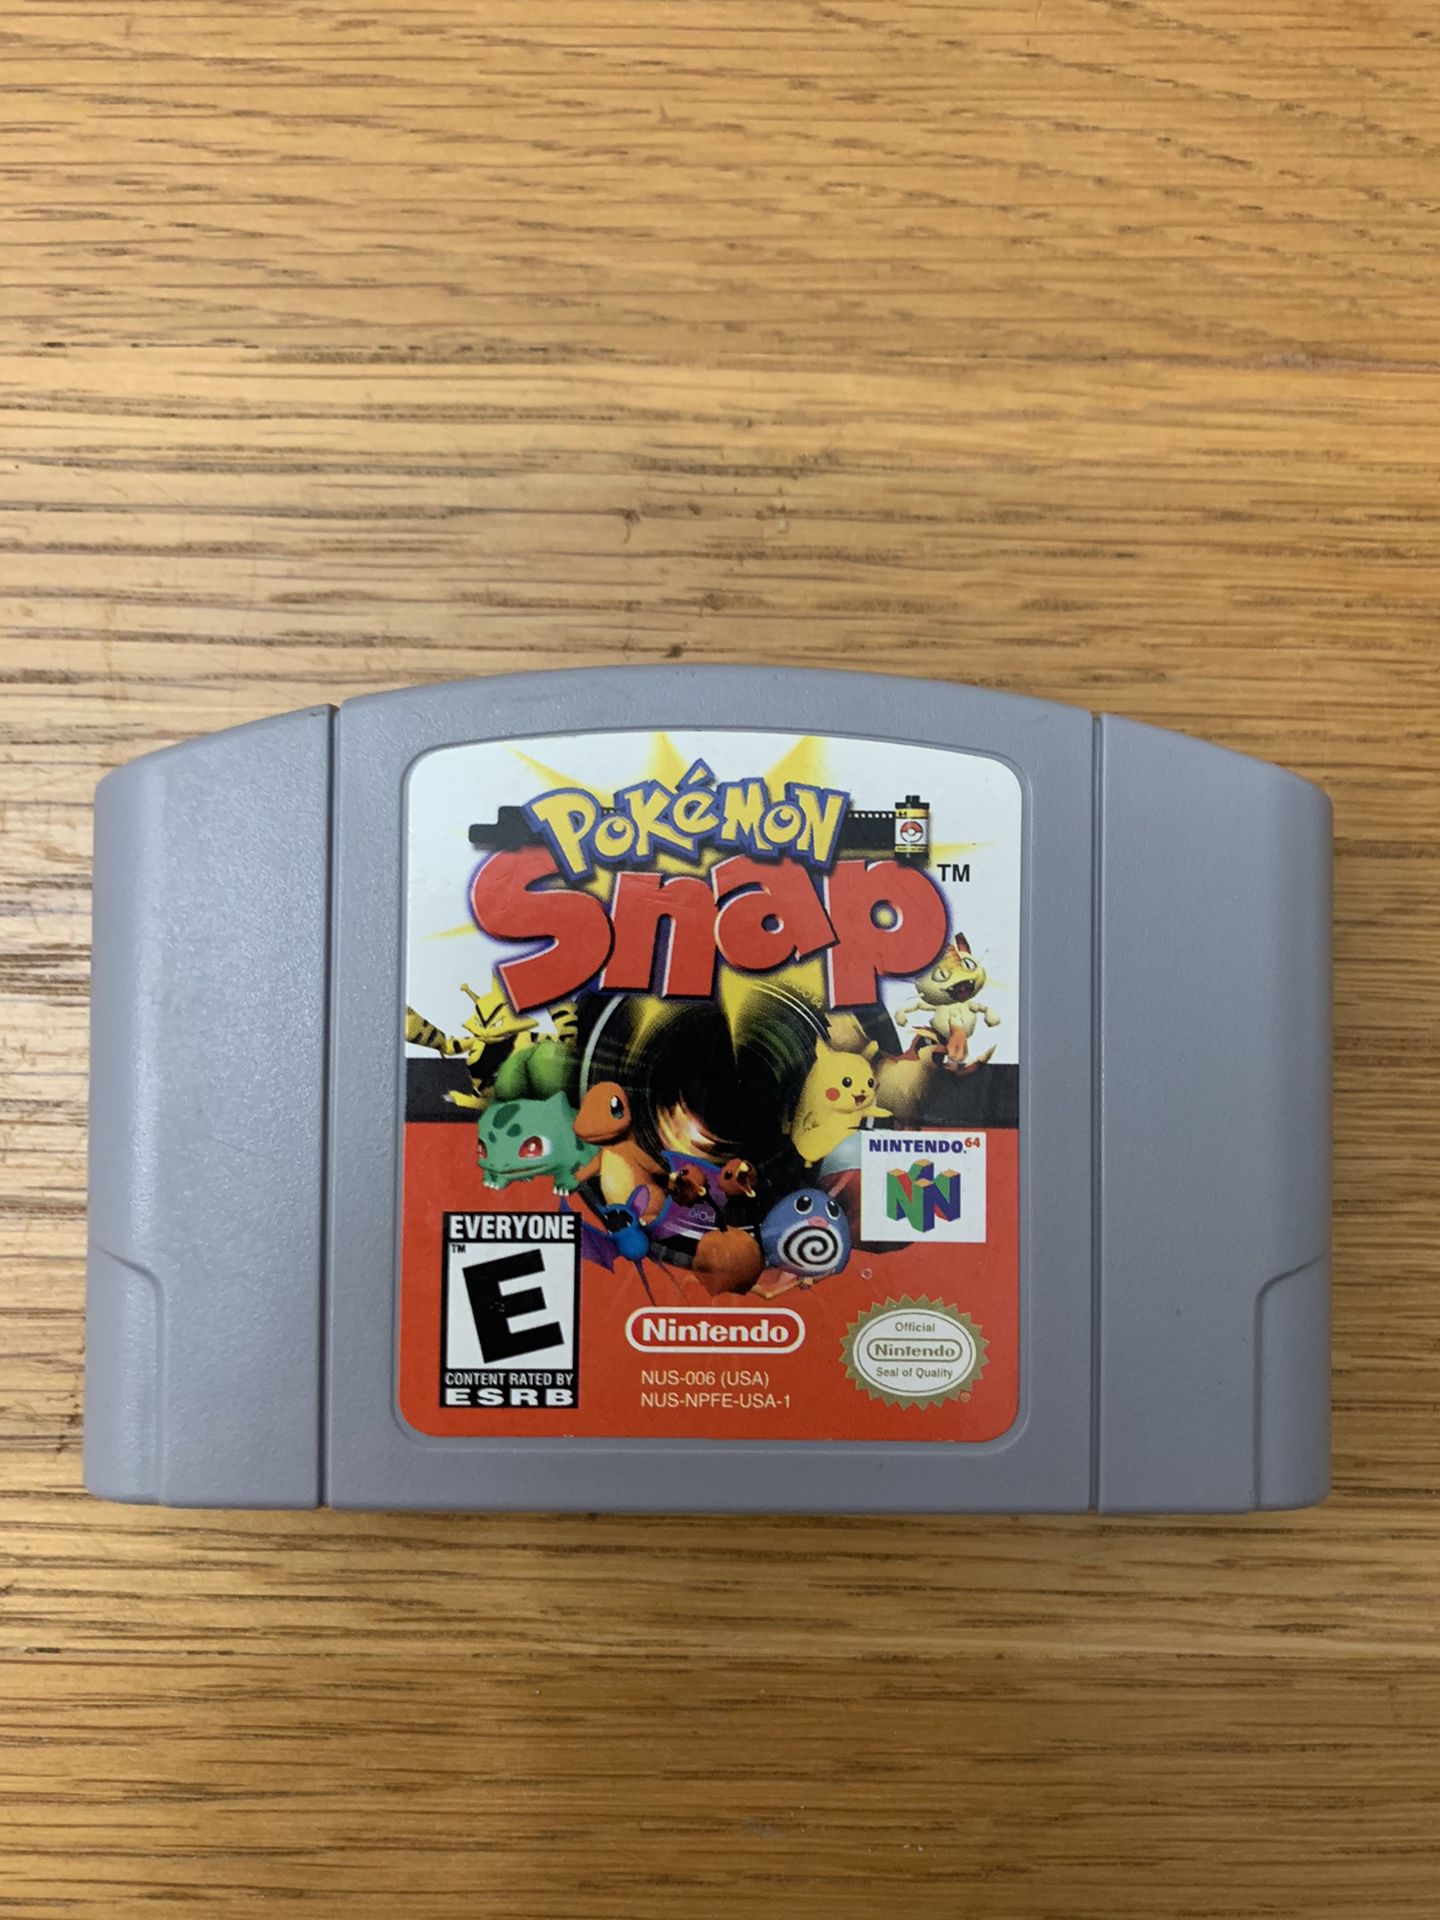 Pokémon Snap Nintendo 64 game